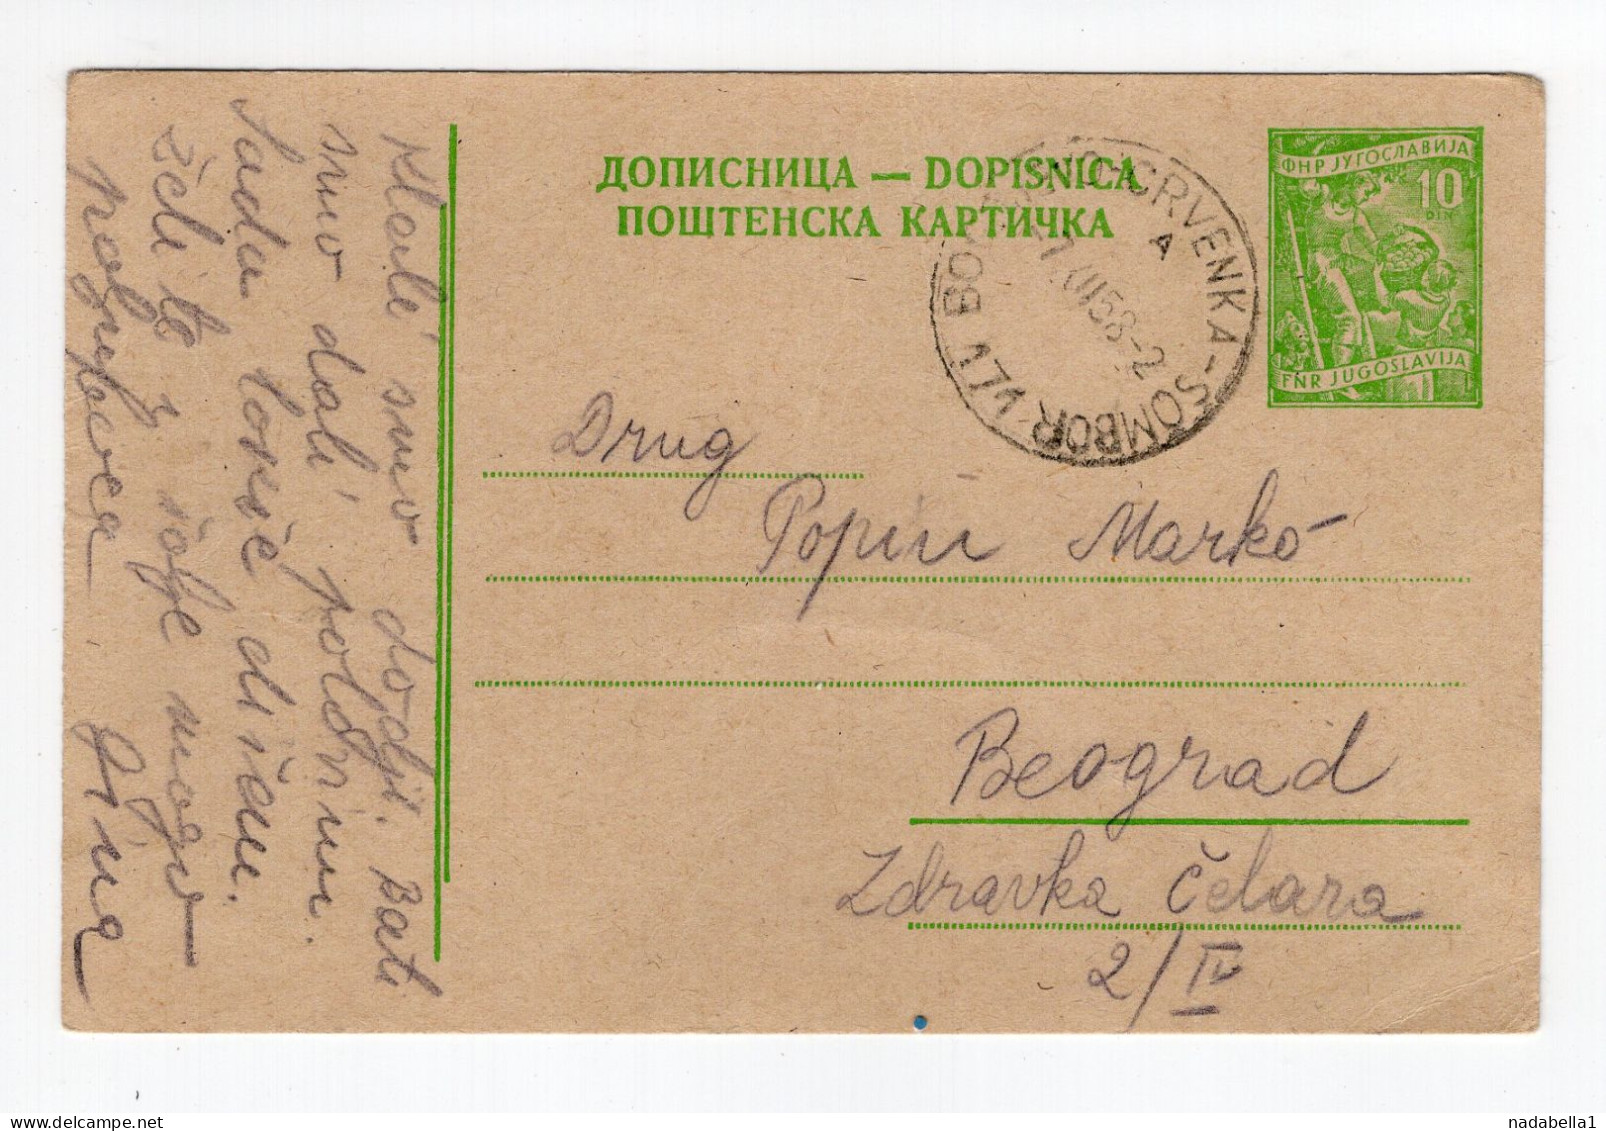 1958. YUGOSLAVIA,SERBIA,TPO 171 BOGOJEVO - CRVENKA - SOMBOR,10 DIN. STATIONERY CARD,USED - Postal Stationery